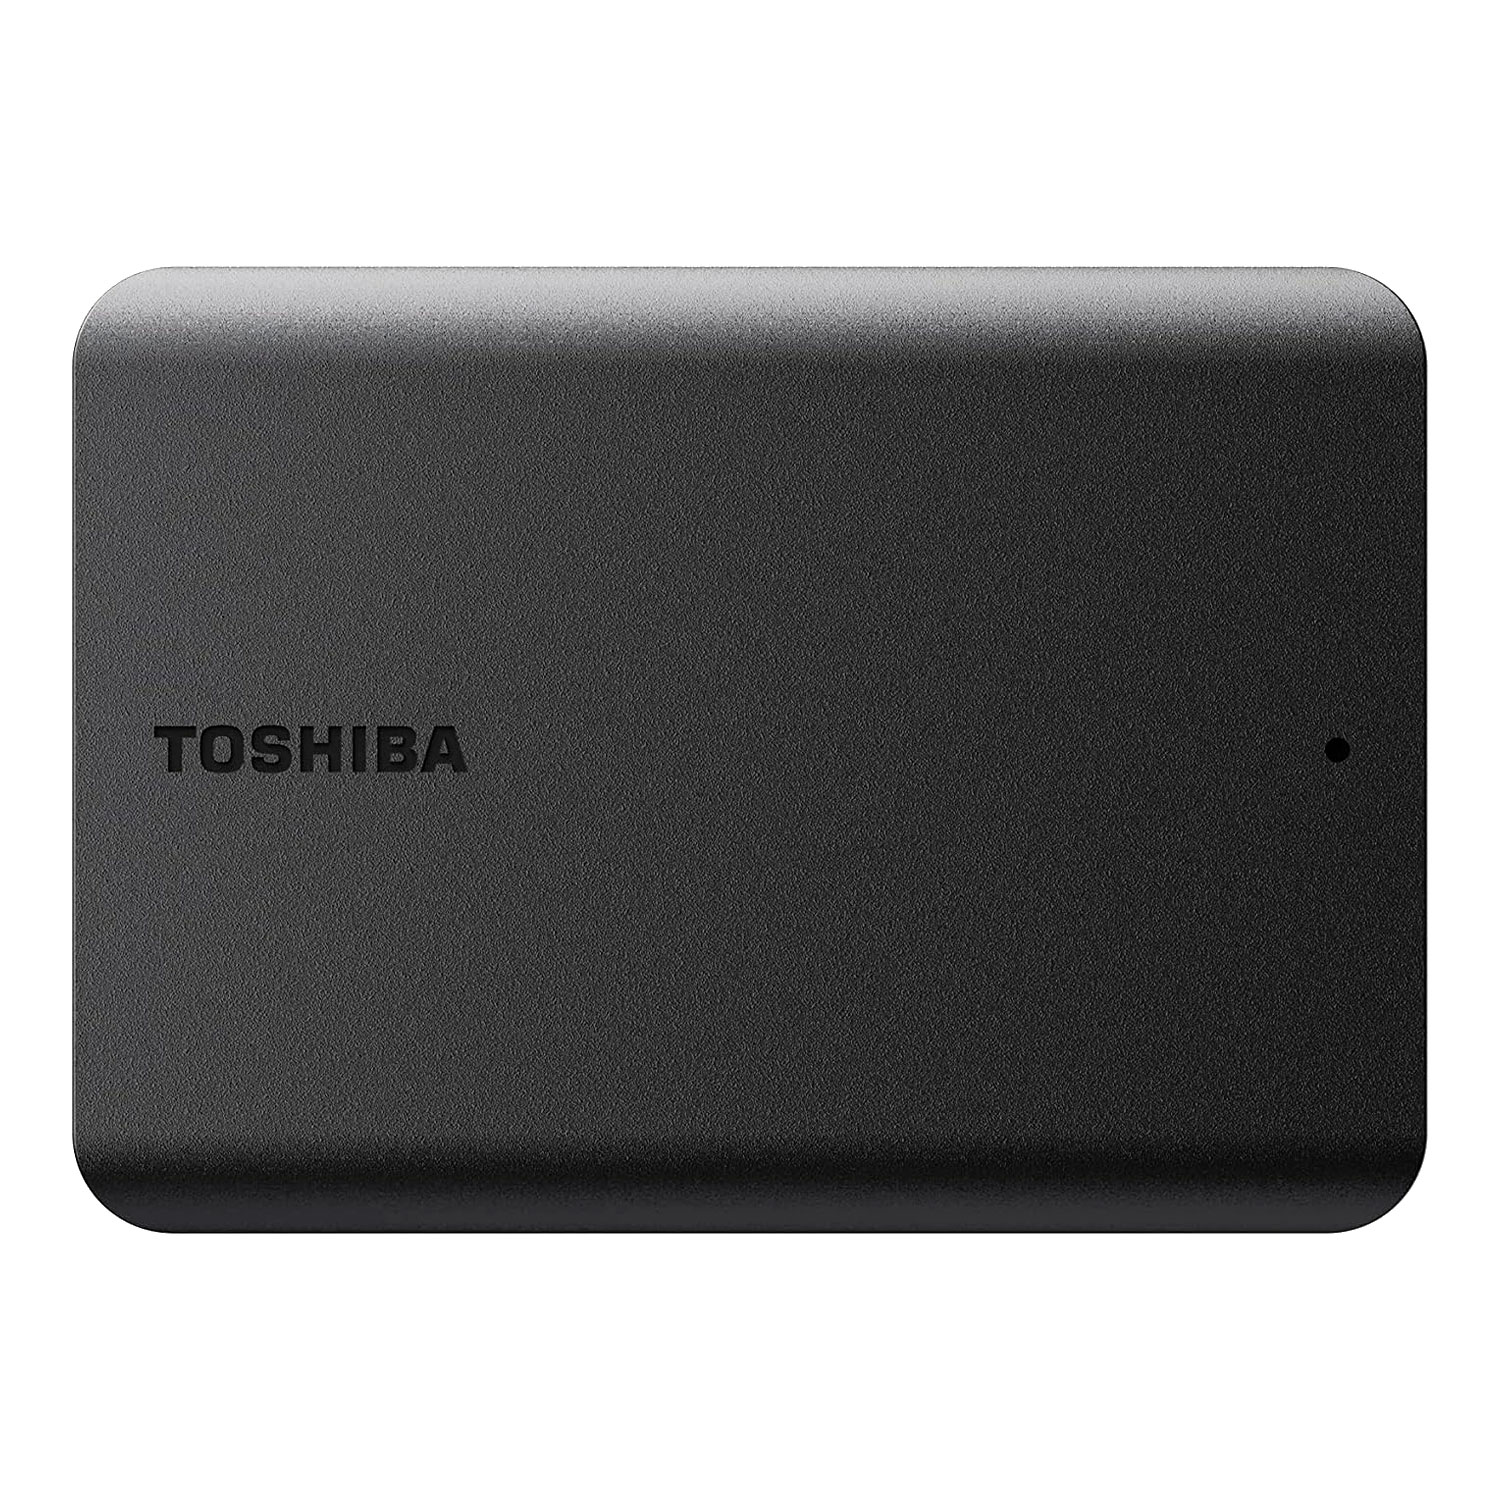 HD Externo Toshiba Canvio Basics 4TB / USB 3.2 - Preto (HDTB540XK3CA)
